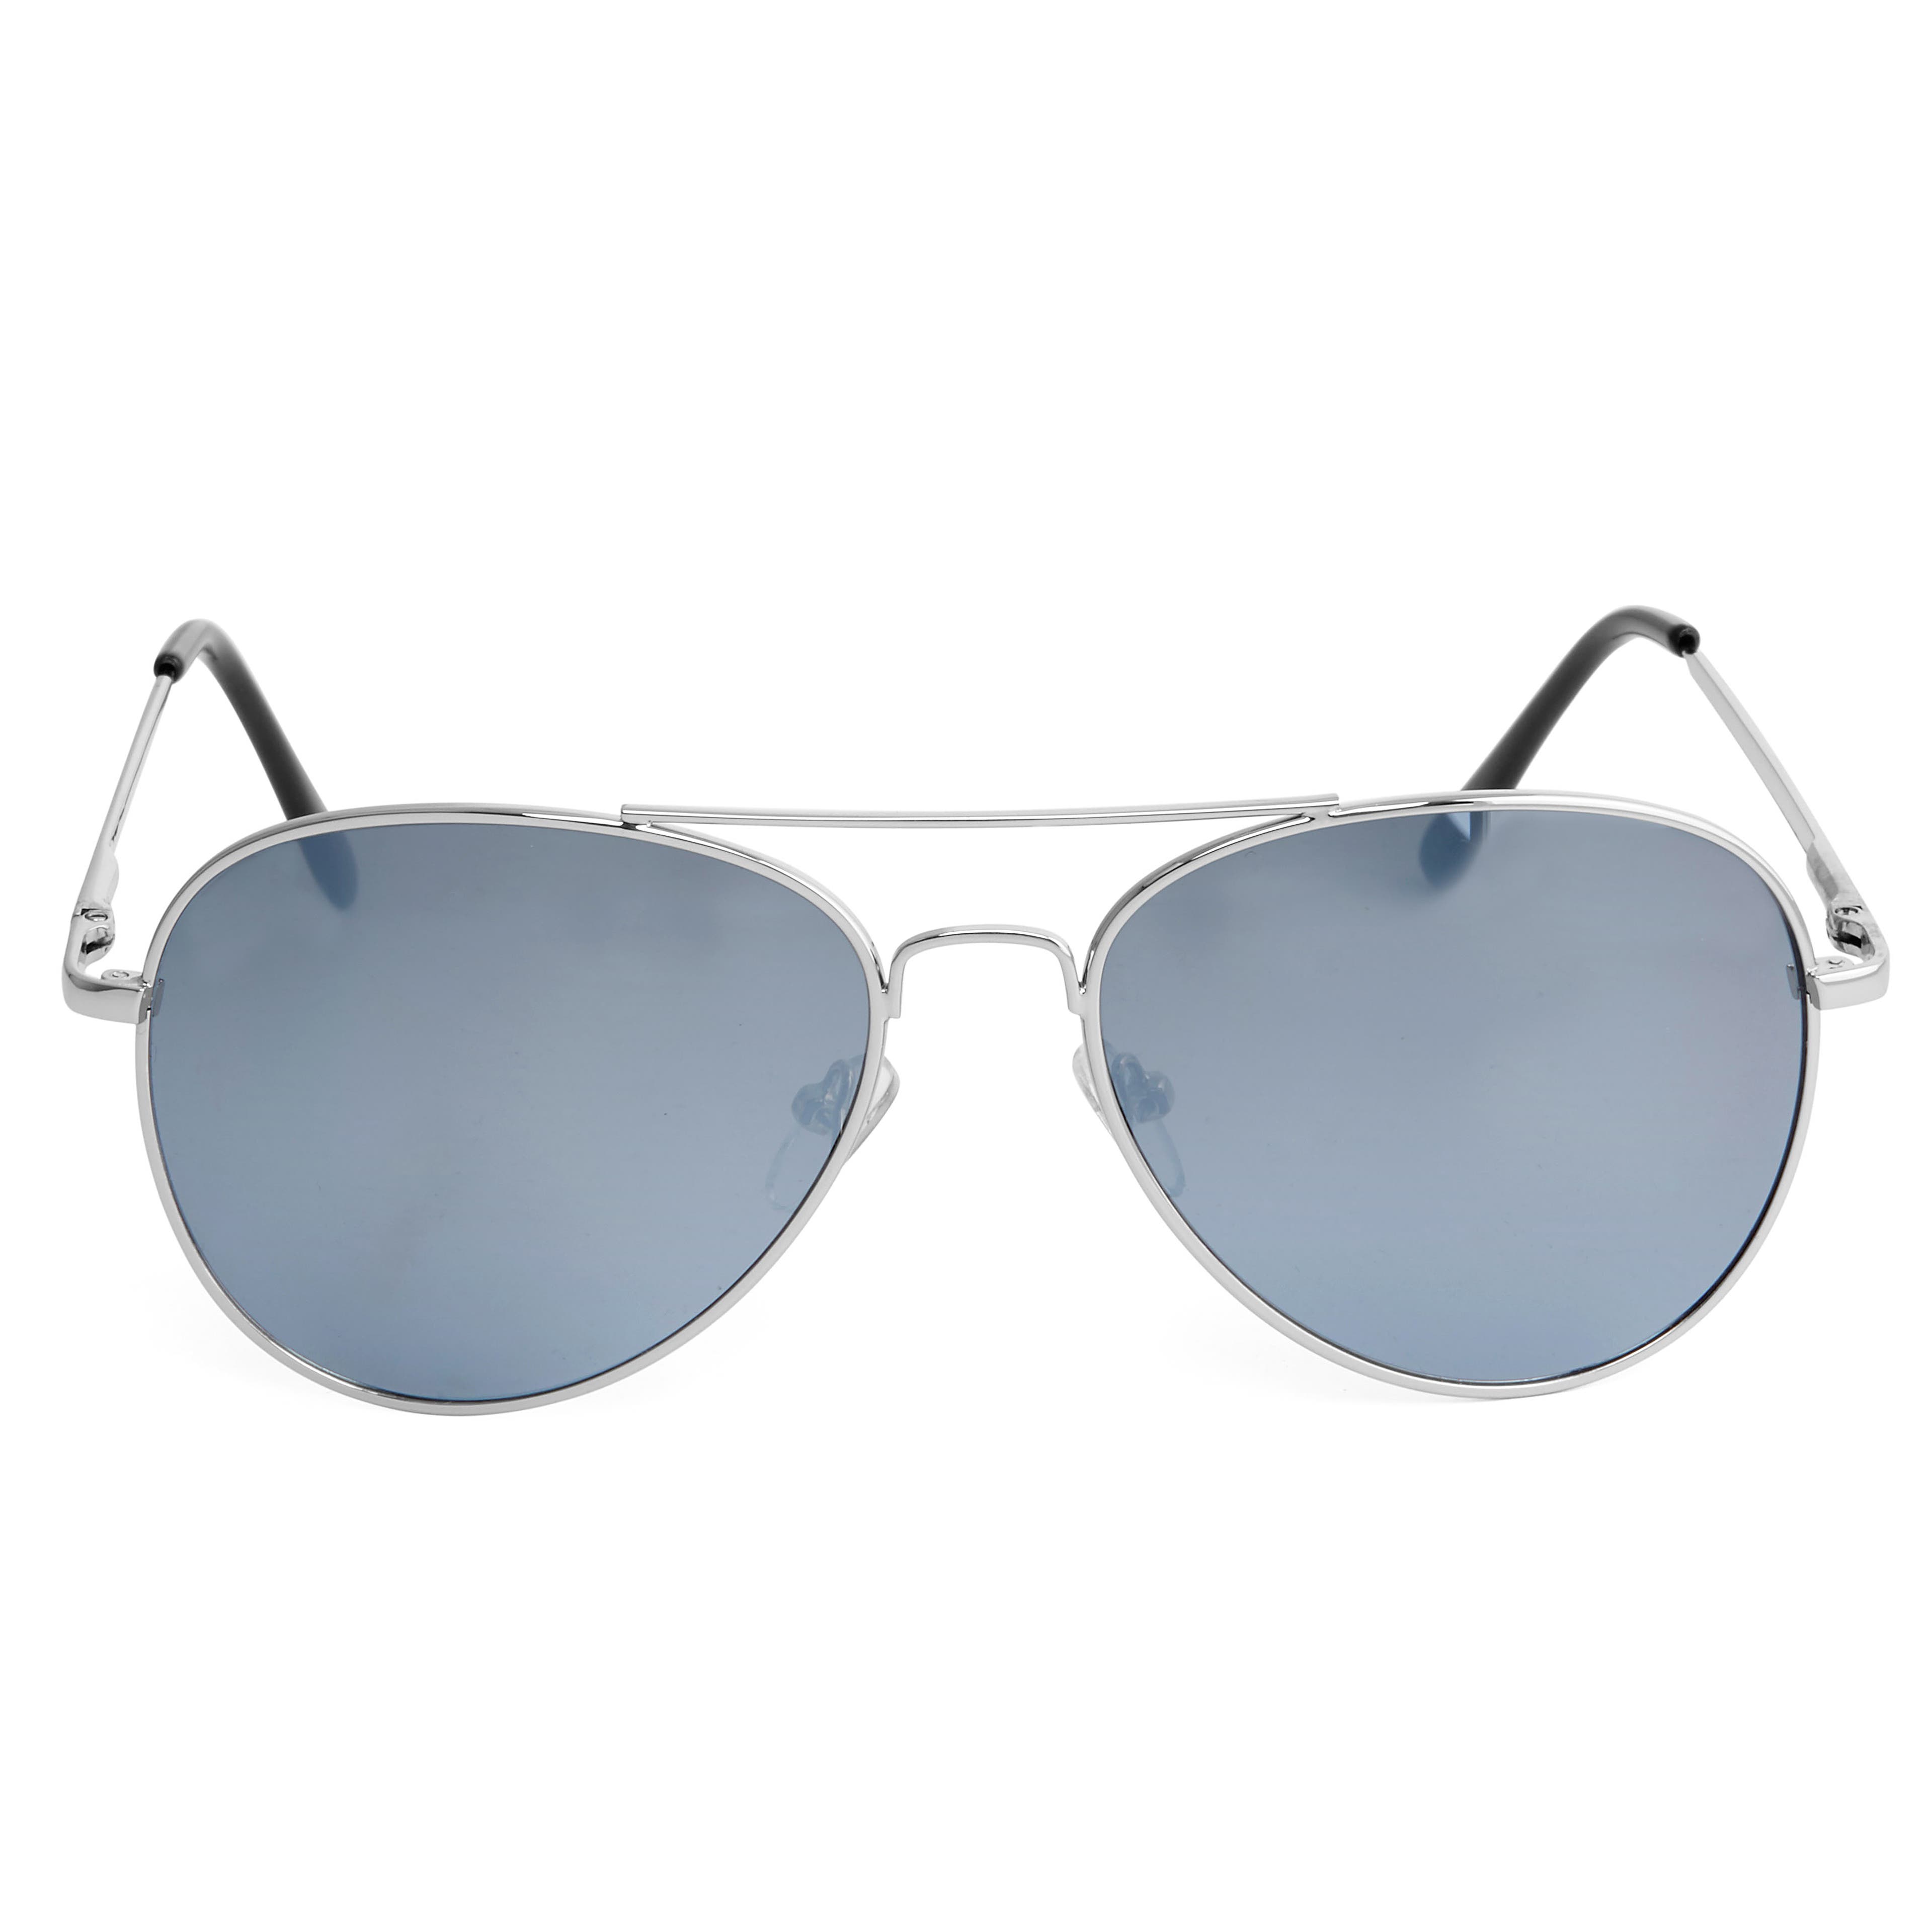 Silver-Tone & Smoke Grey Aviator Sunglasses